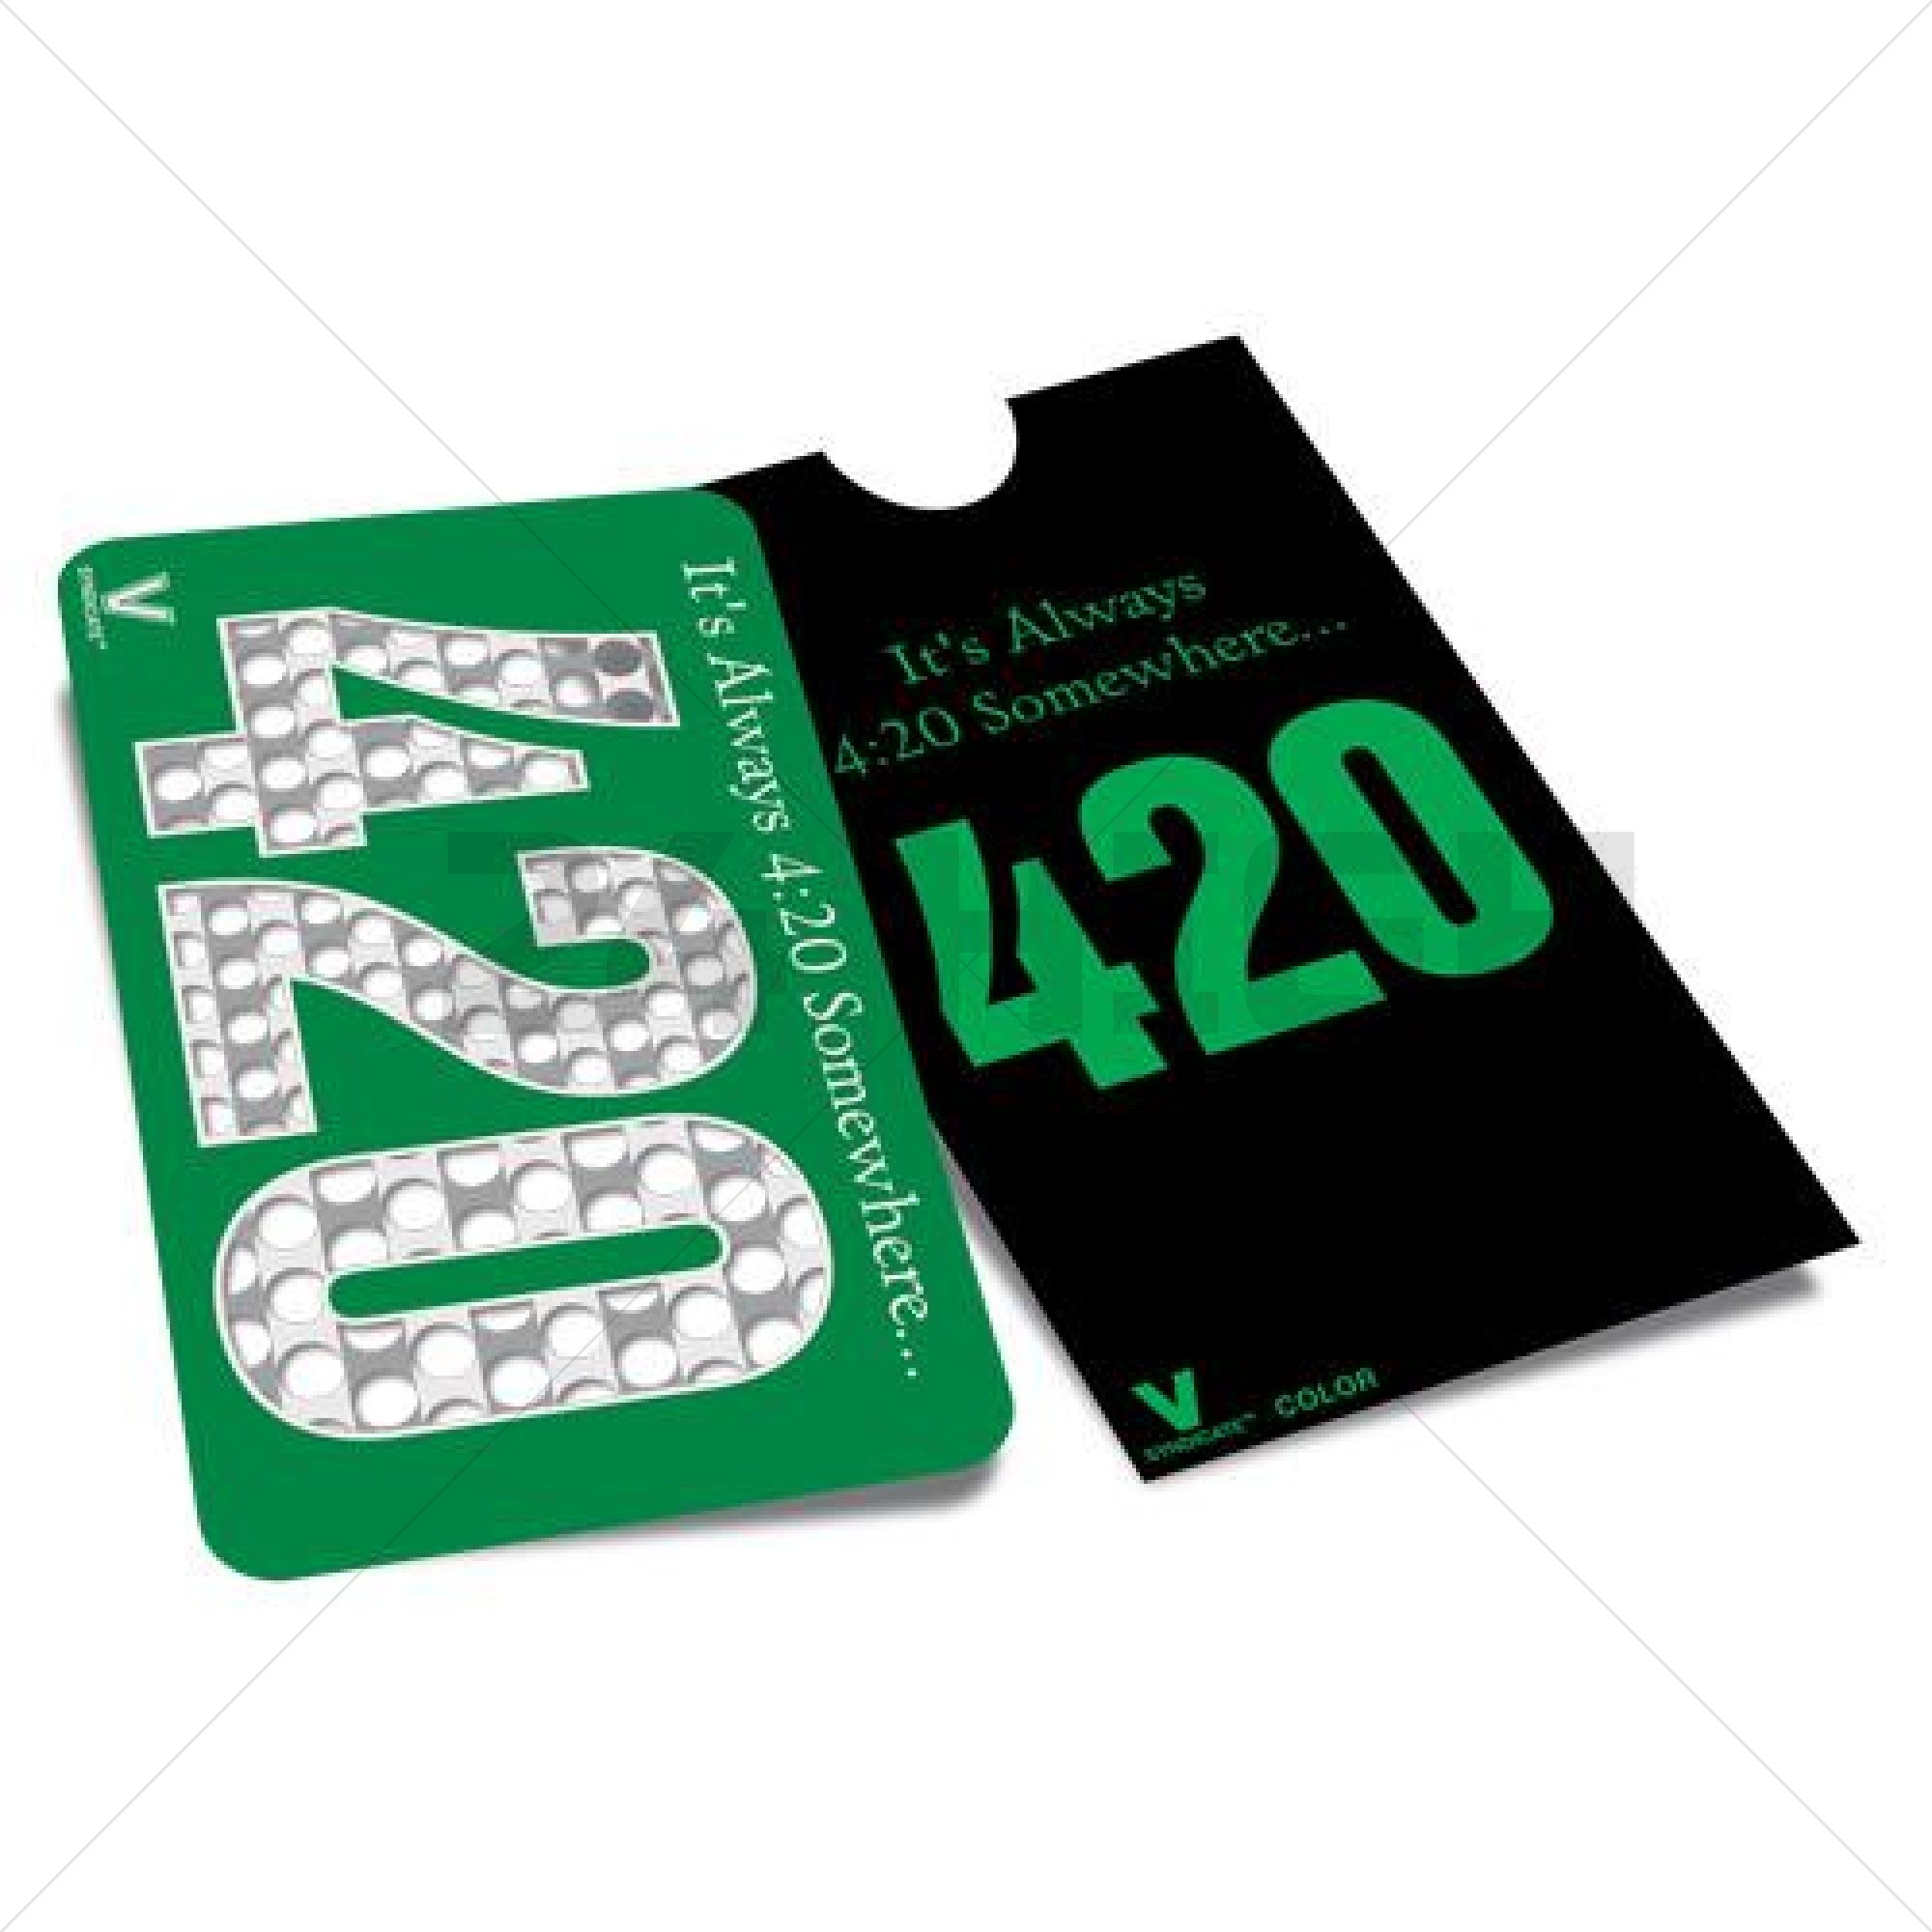 Broyeur de cartes de crédit 420